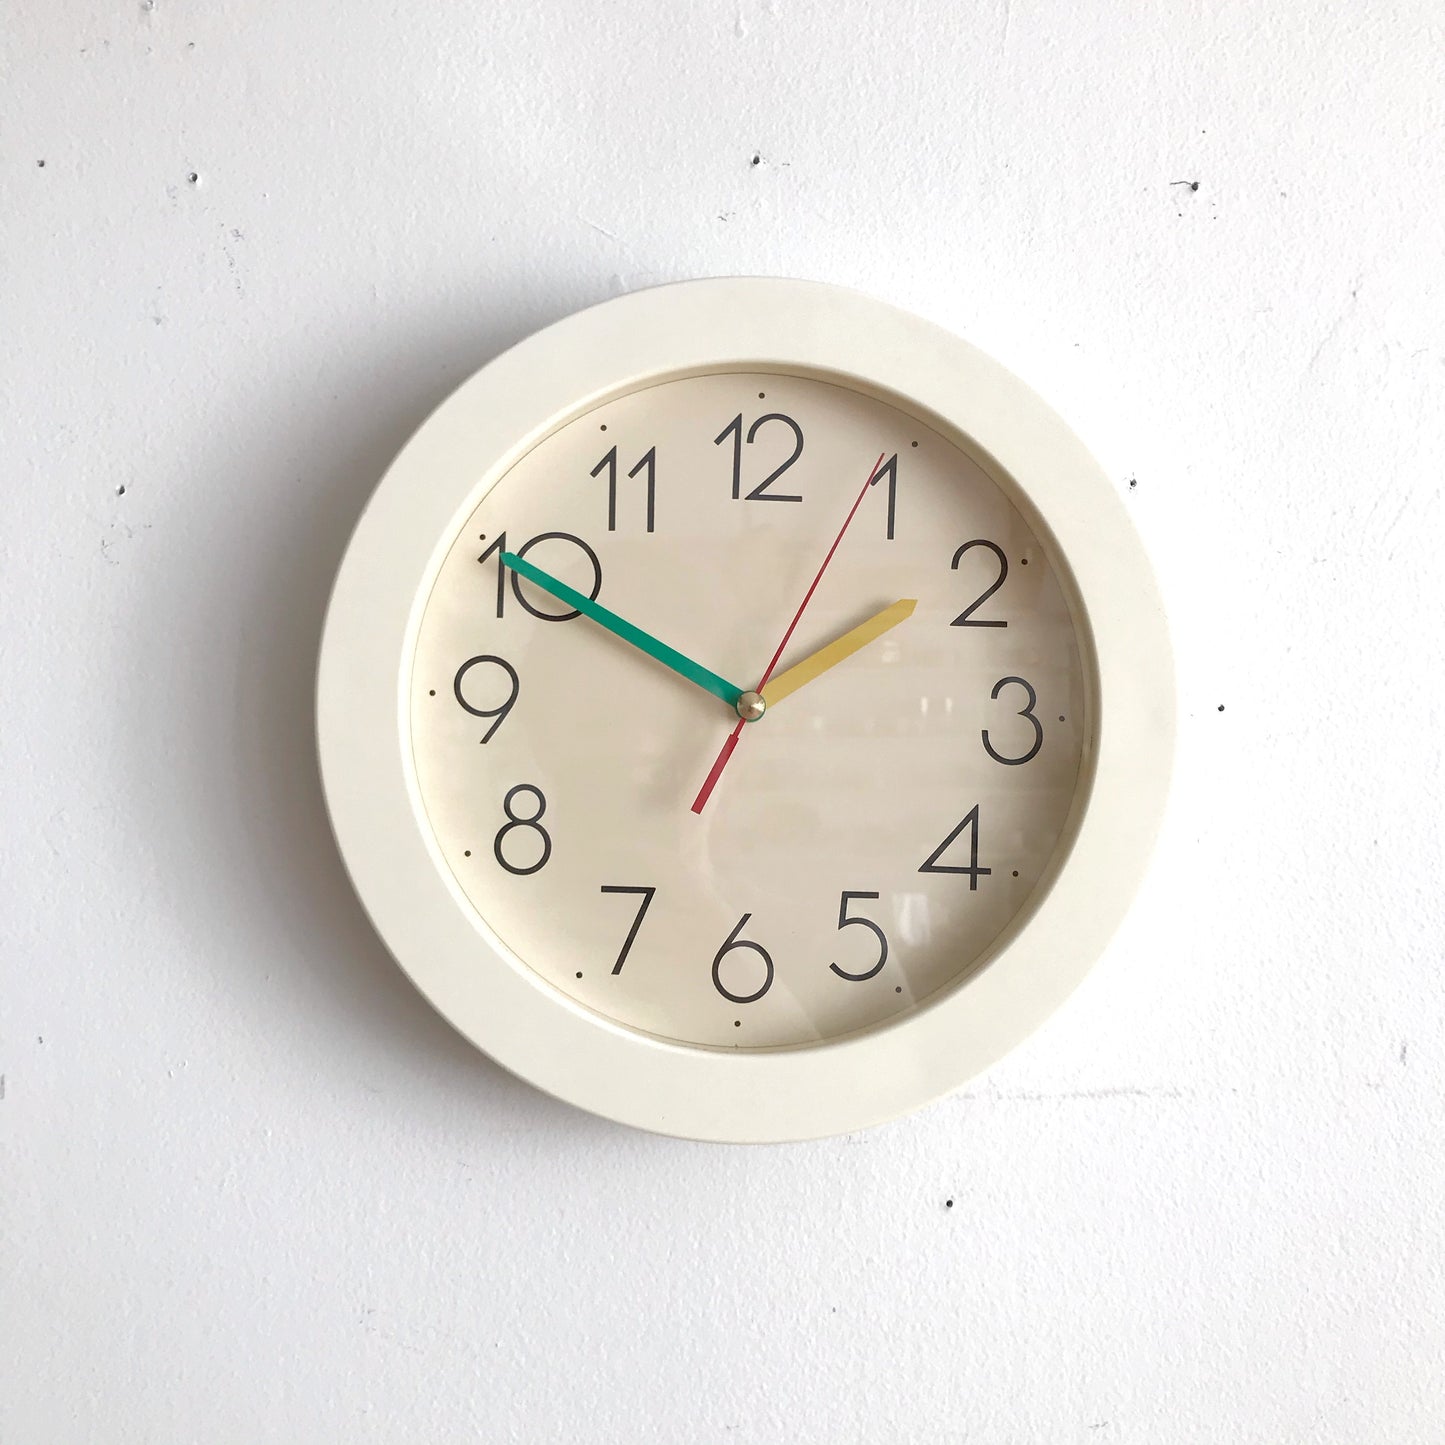 Vintage Post-Modern Analog Wall Clock